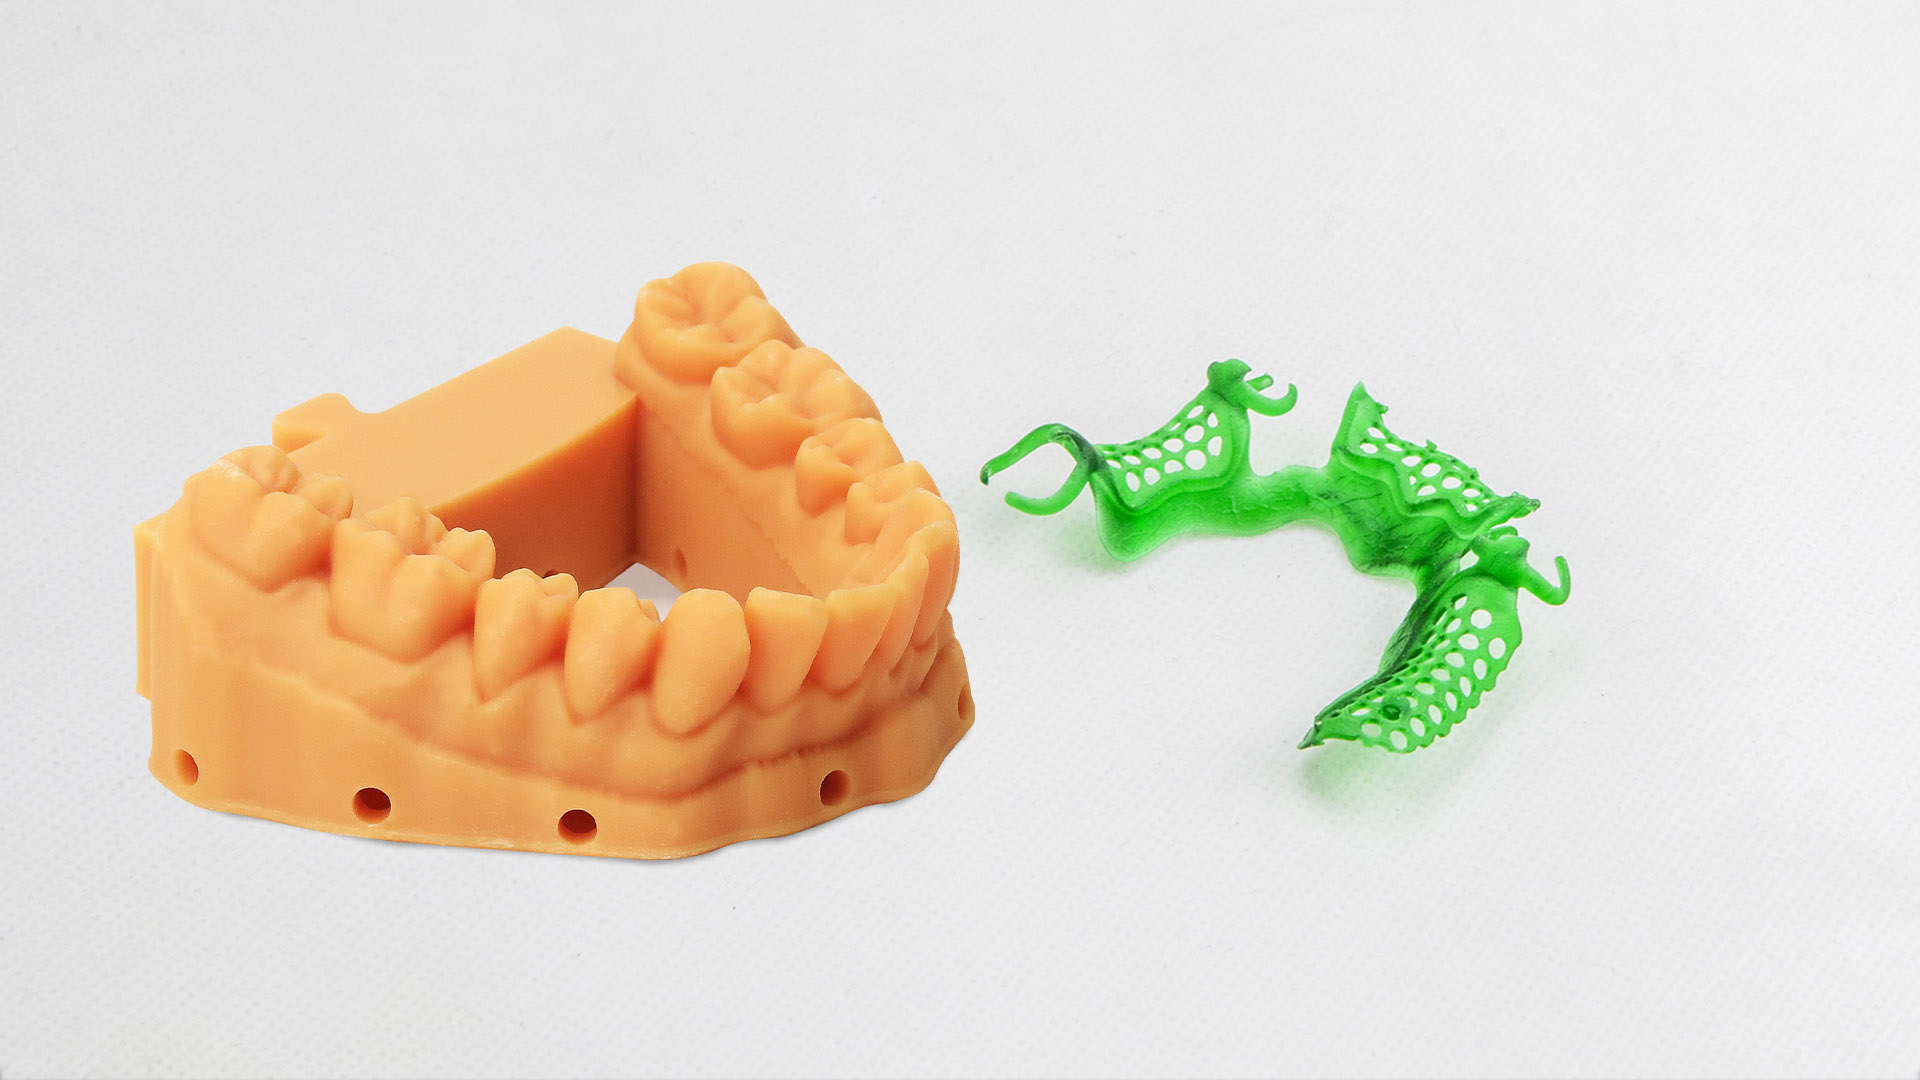 ACME-8K dental 3D printing digital manufacturing, innovative 